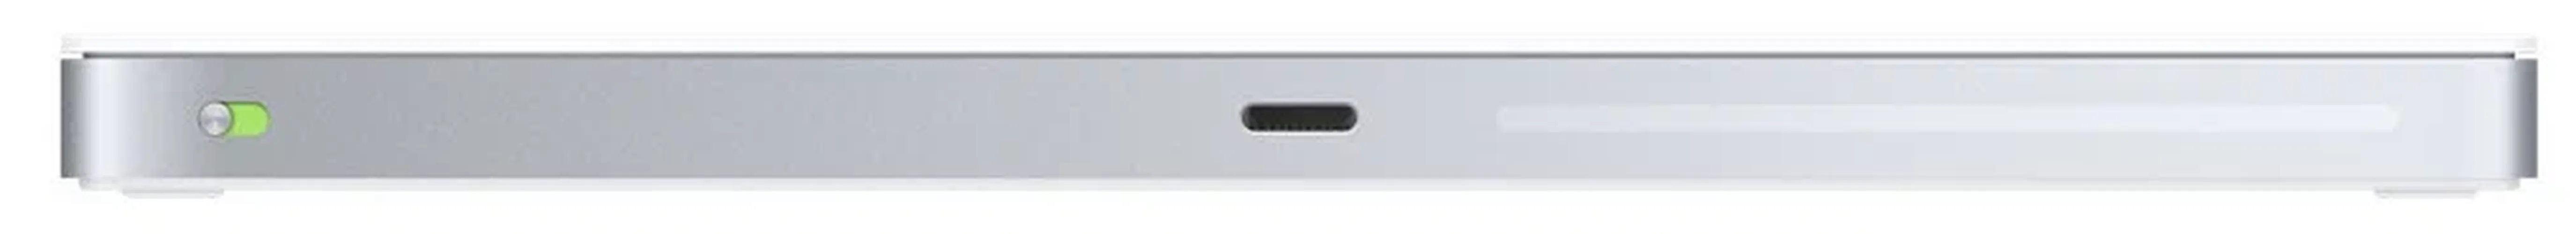 Трекпад Apple Magic Trackpad 2, Серебристый, купить недорого